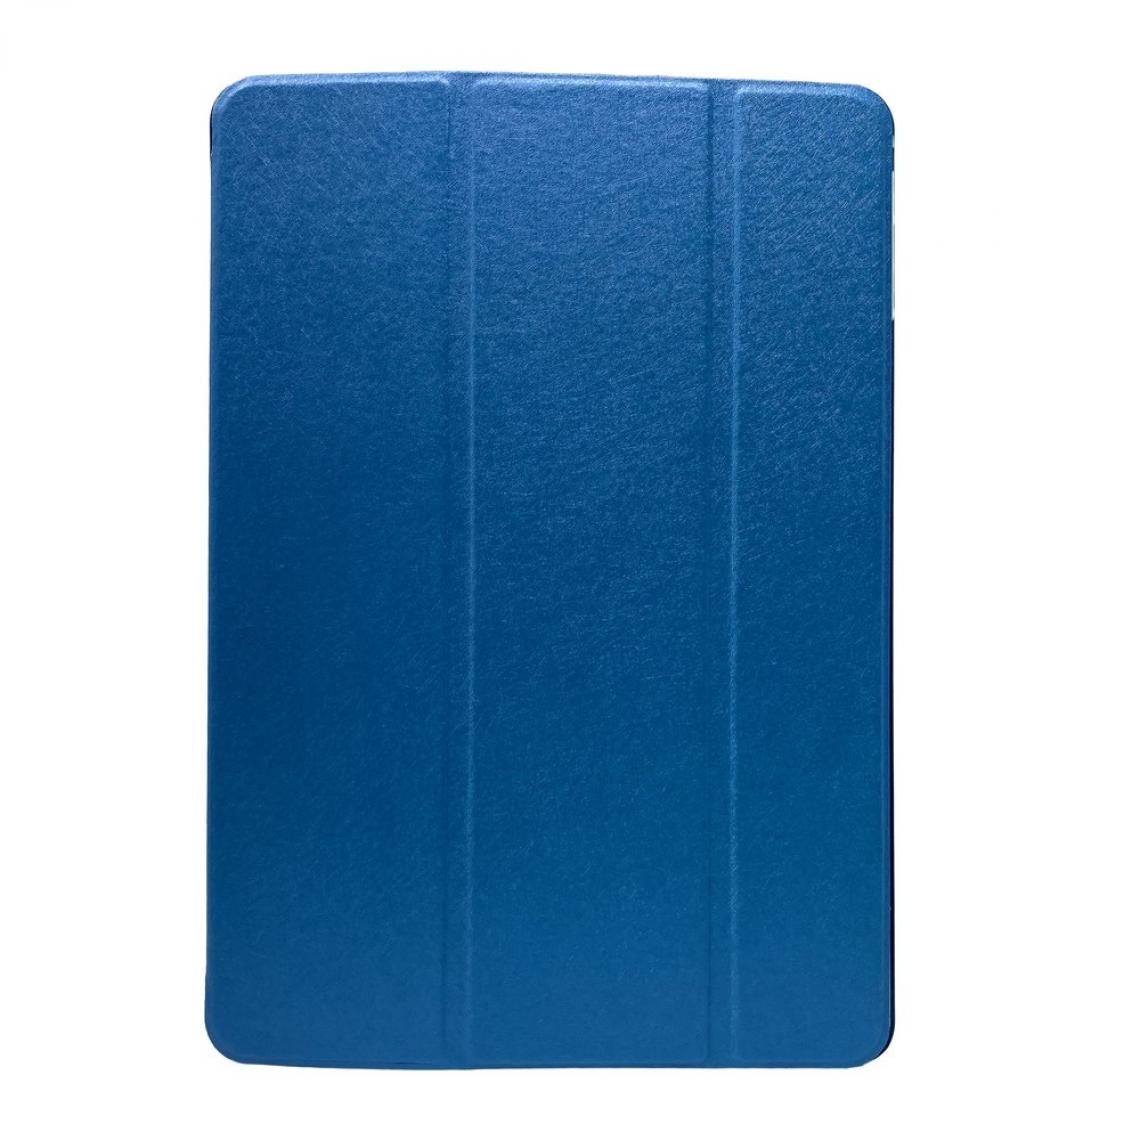 marque generique - Coque iPad Air 1/2 9.7" - bleu - Coque, étui smartphone